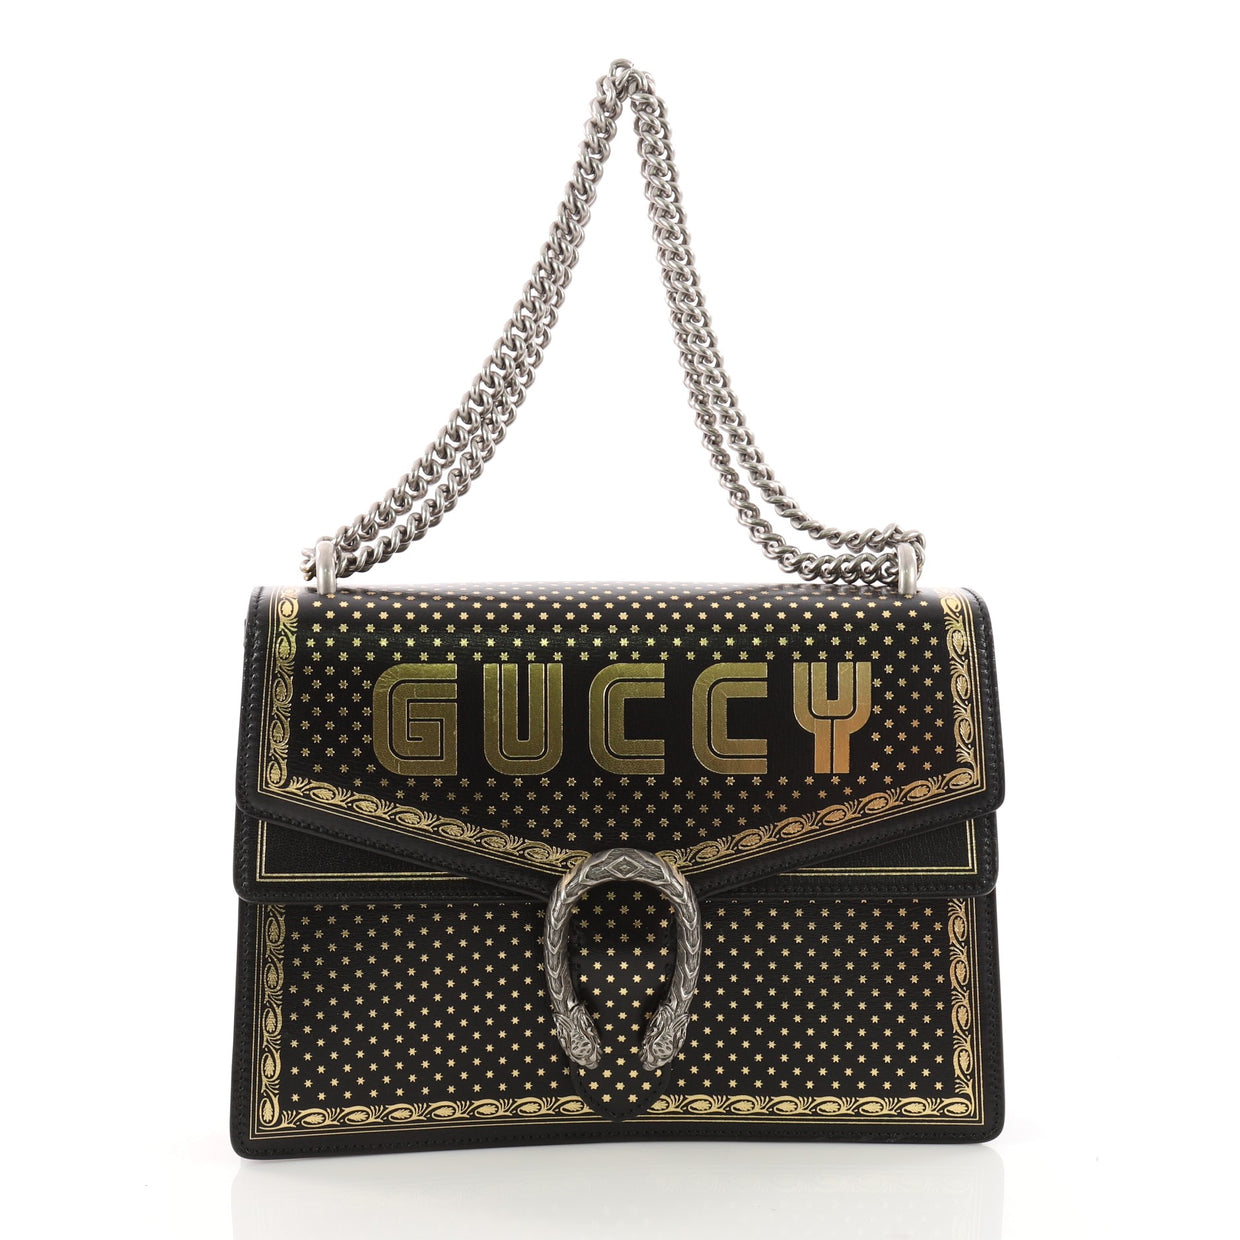 Gucci Dionysus Handbag Limited Edition Printed Leather 3399101